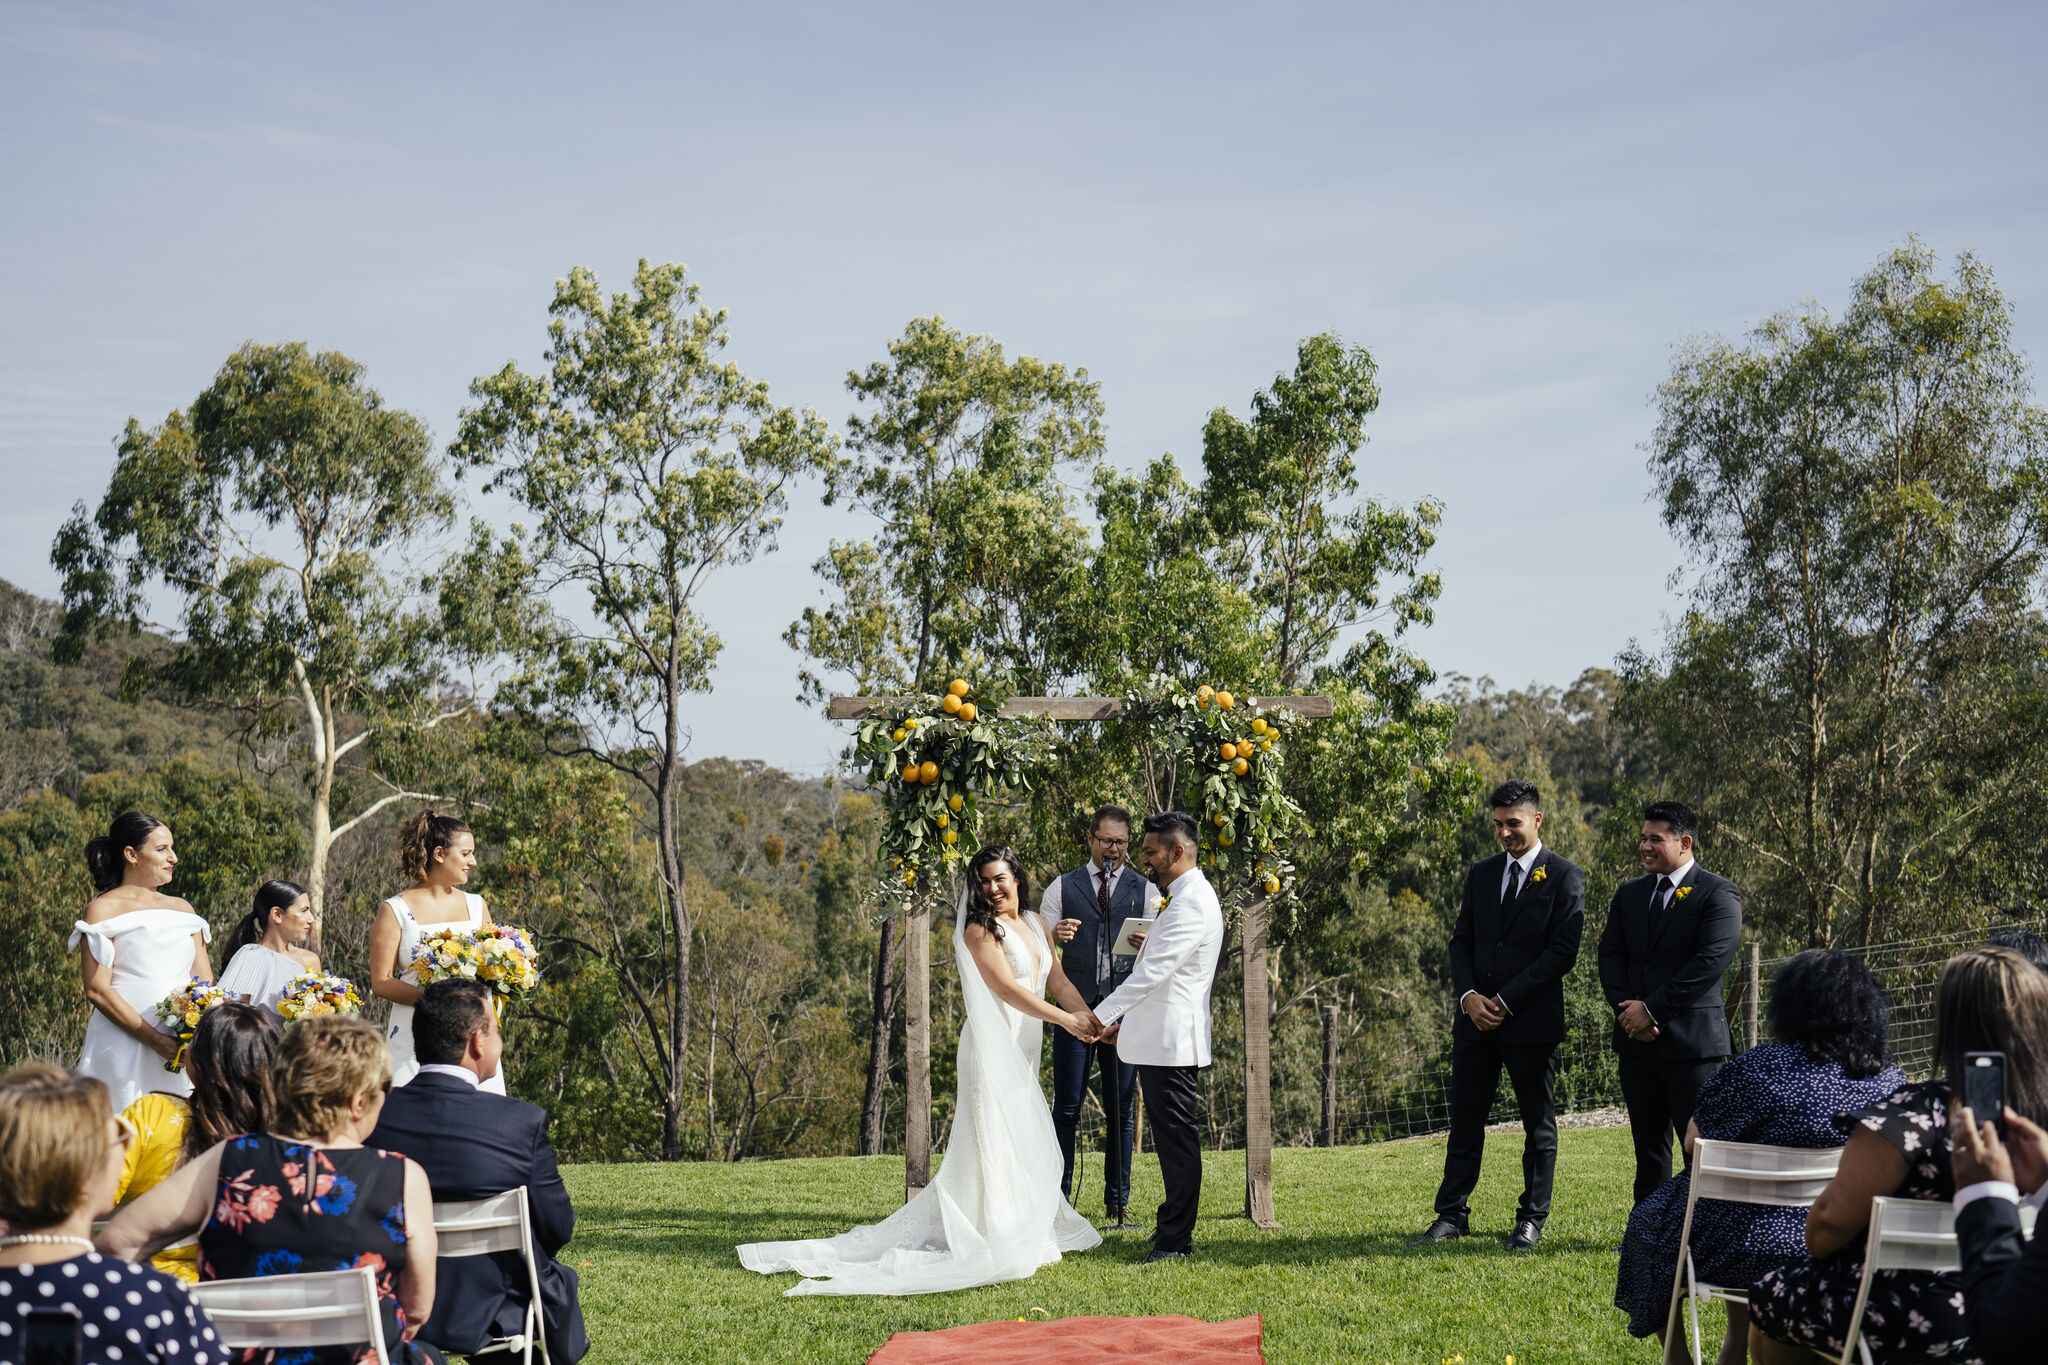 Natalie & Justin's Wedding at Farm Vigano